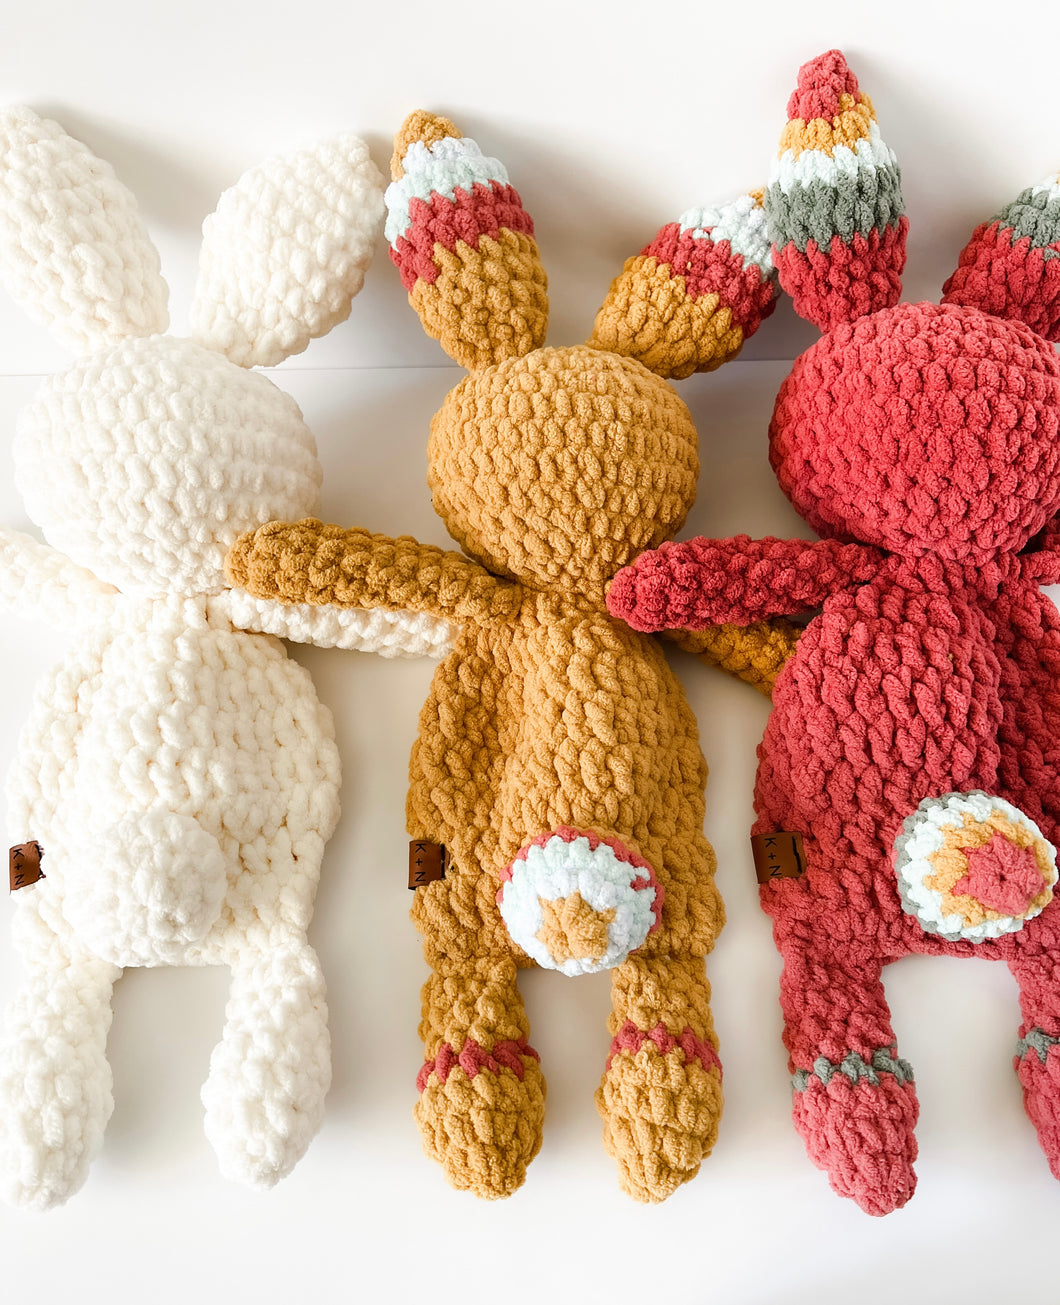 The Boho Bunny Crochet Pattern